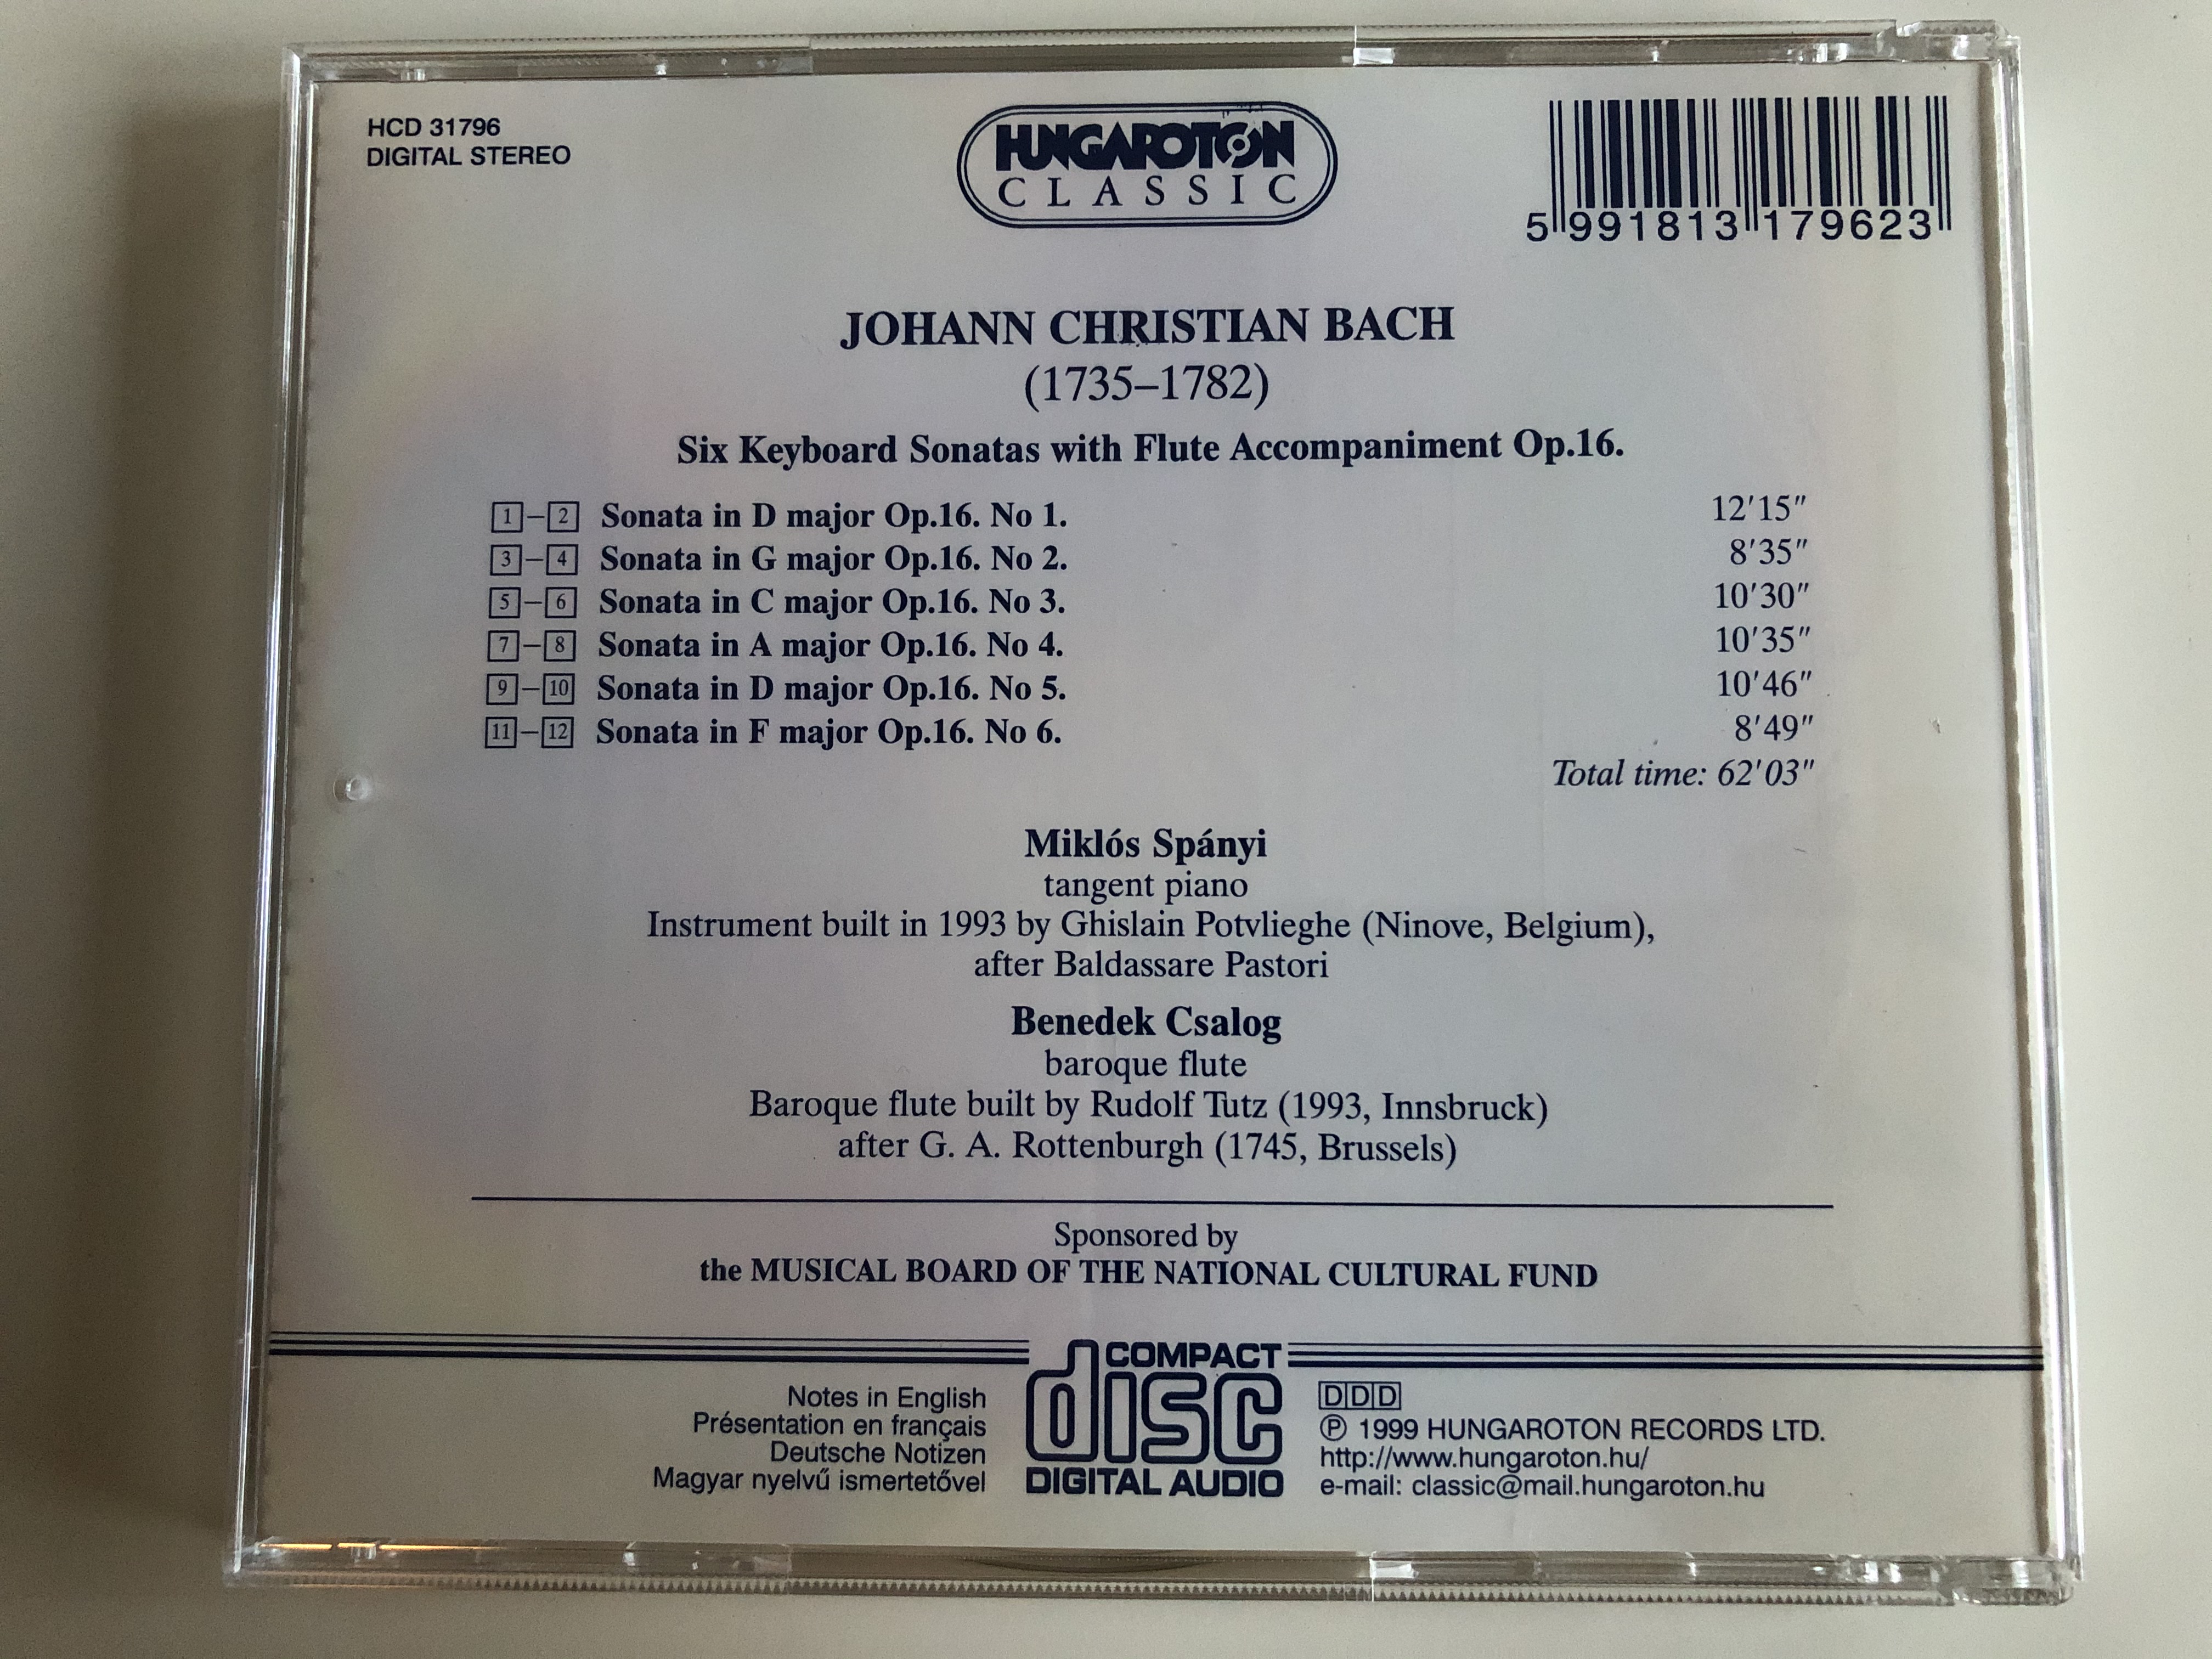 johann-christian-bach-six-keyboard-sonatas-op.-16-with-flute-accompaniment-miklos-spanyi-tangent-piano-benedek-csalog-baroque-flute-hungaroton-classic-audio-cd-1999-stereo-hcd-31796-1-8-.jpg